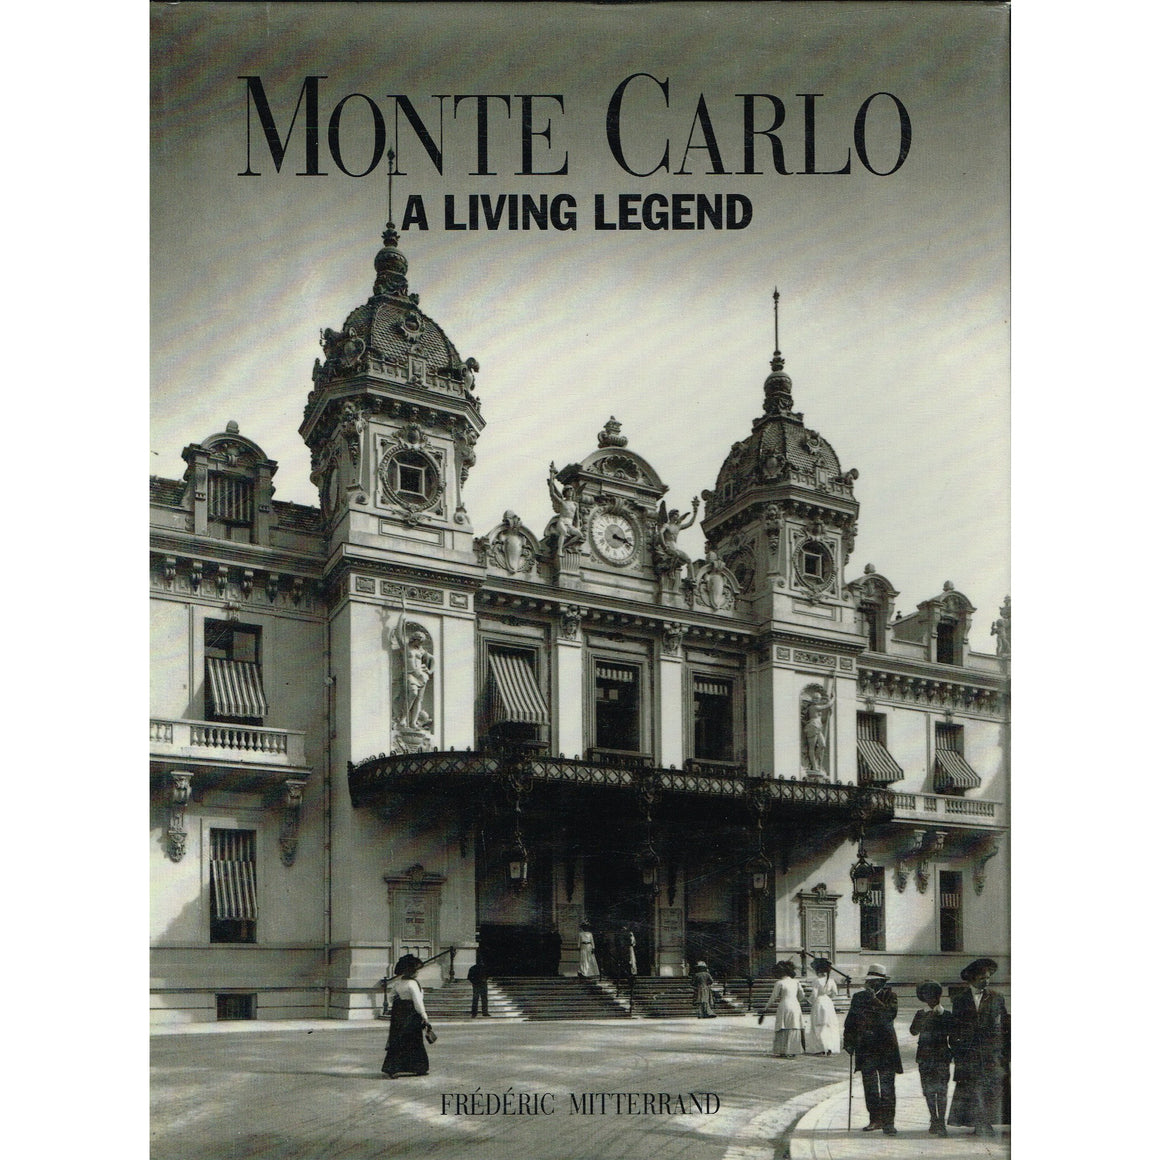 Monte Carlo A Living Legend